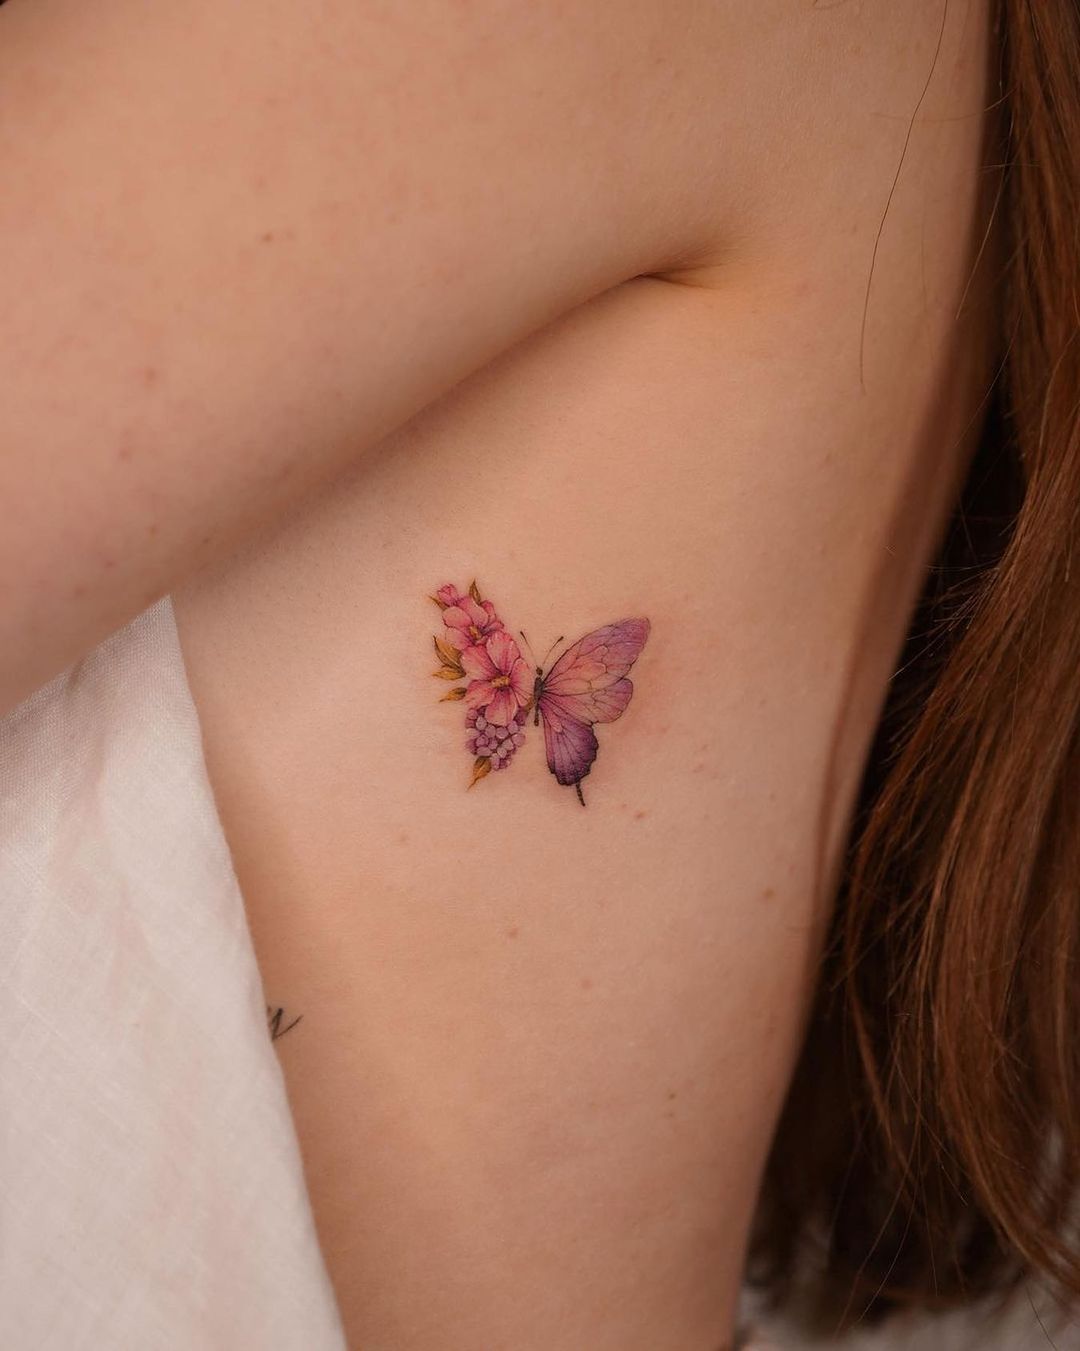 Butterfly ribs tattoo by hood.seven